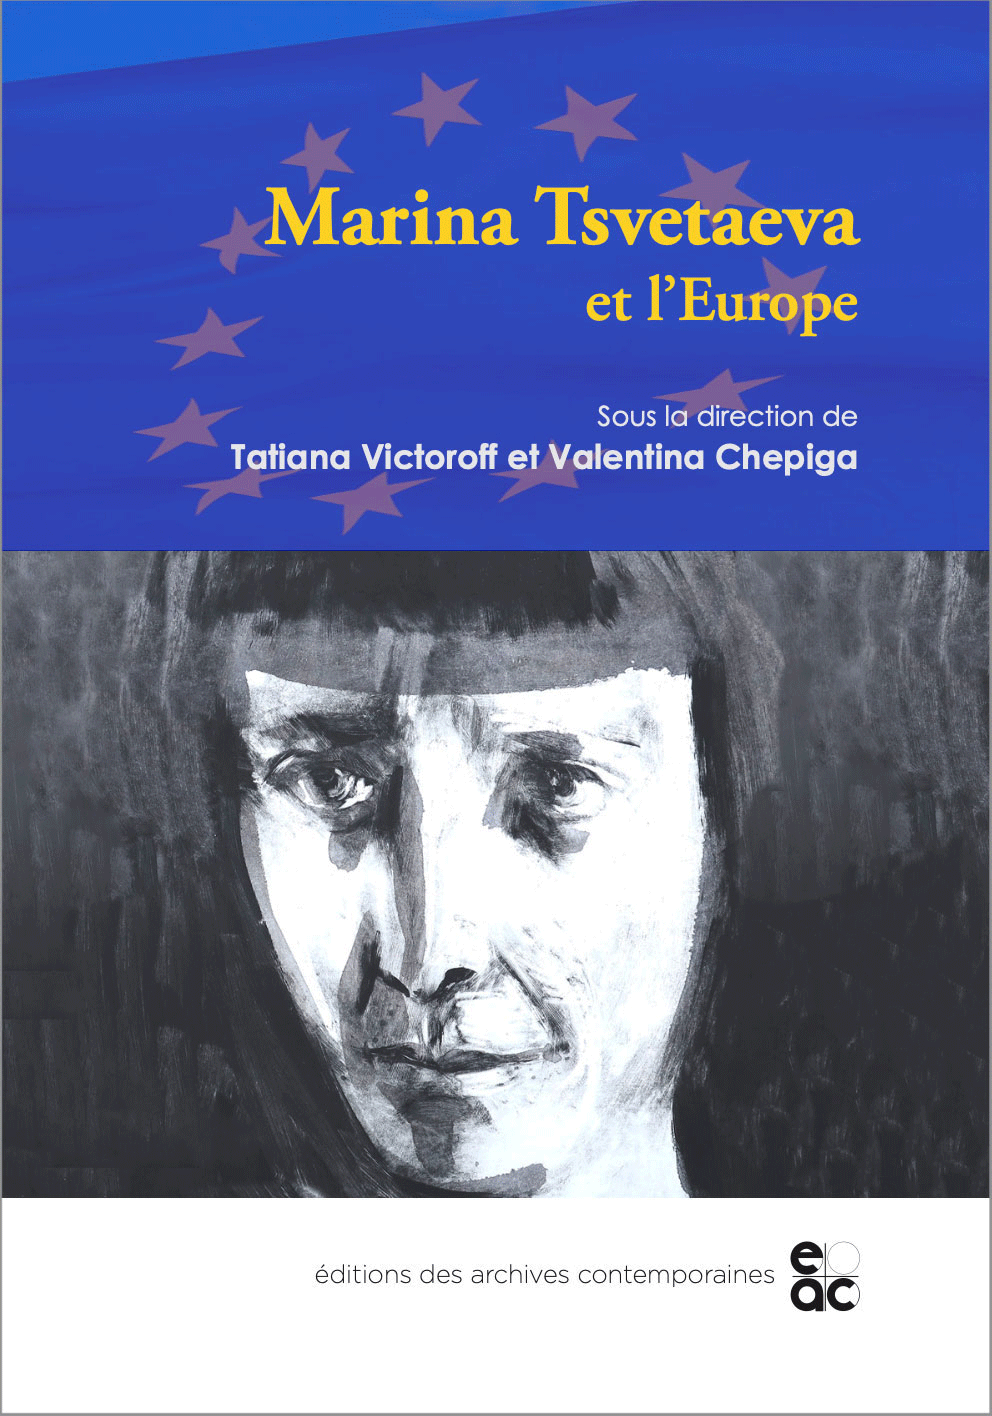 Couverture de l'ouvrage "Marina Tsvetaeva et l'Europe"